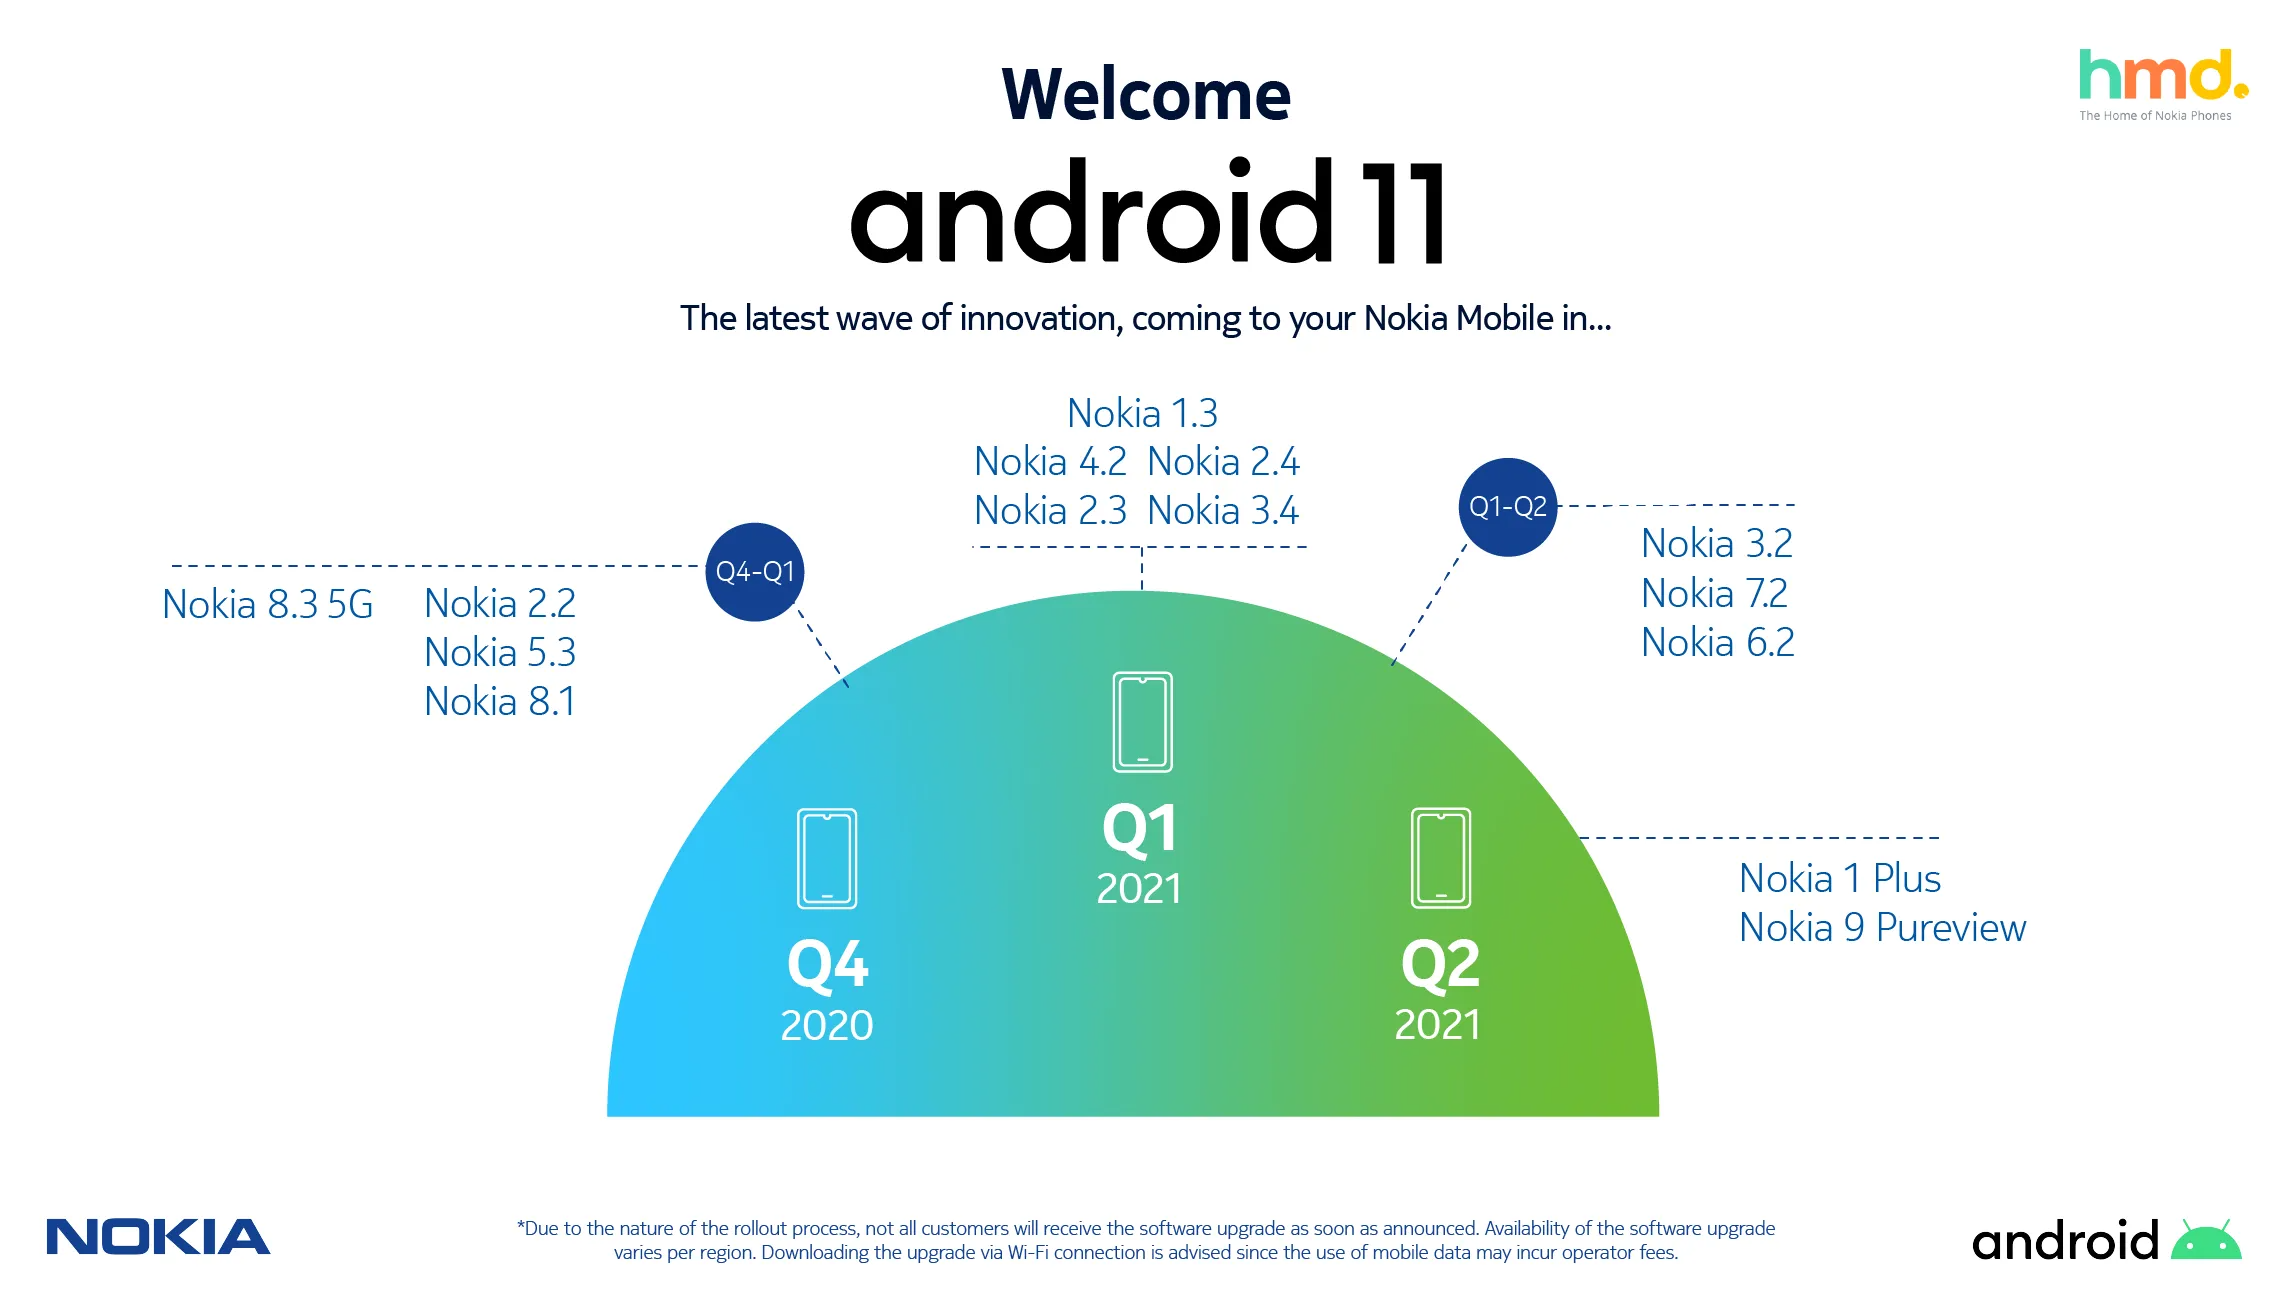 Nokia Android 11